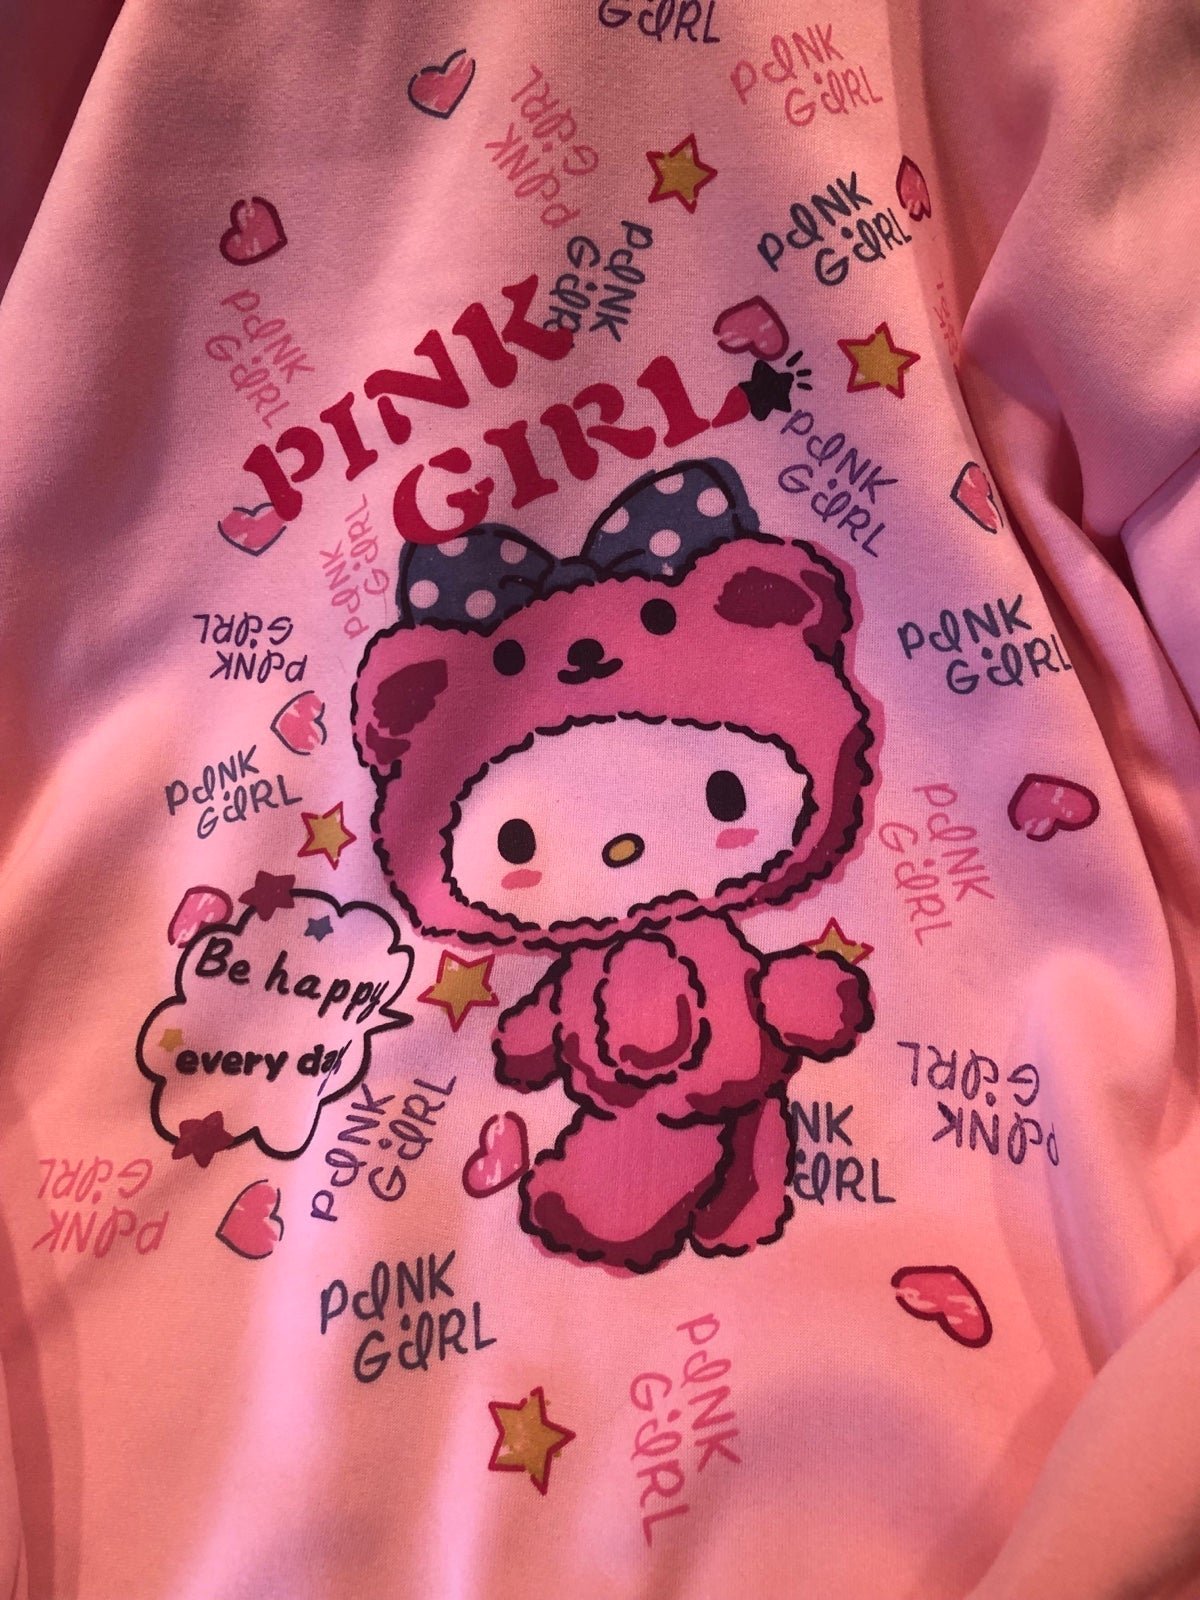 Great Hello Kitty PINK GIRL sweatshirt 5x FsS5arDLE Eve